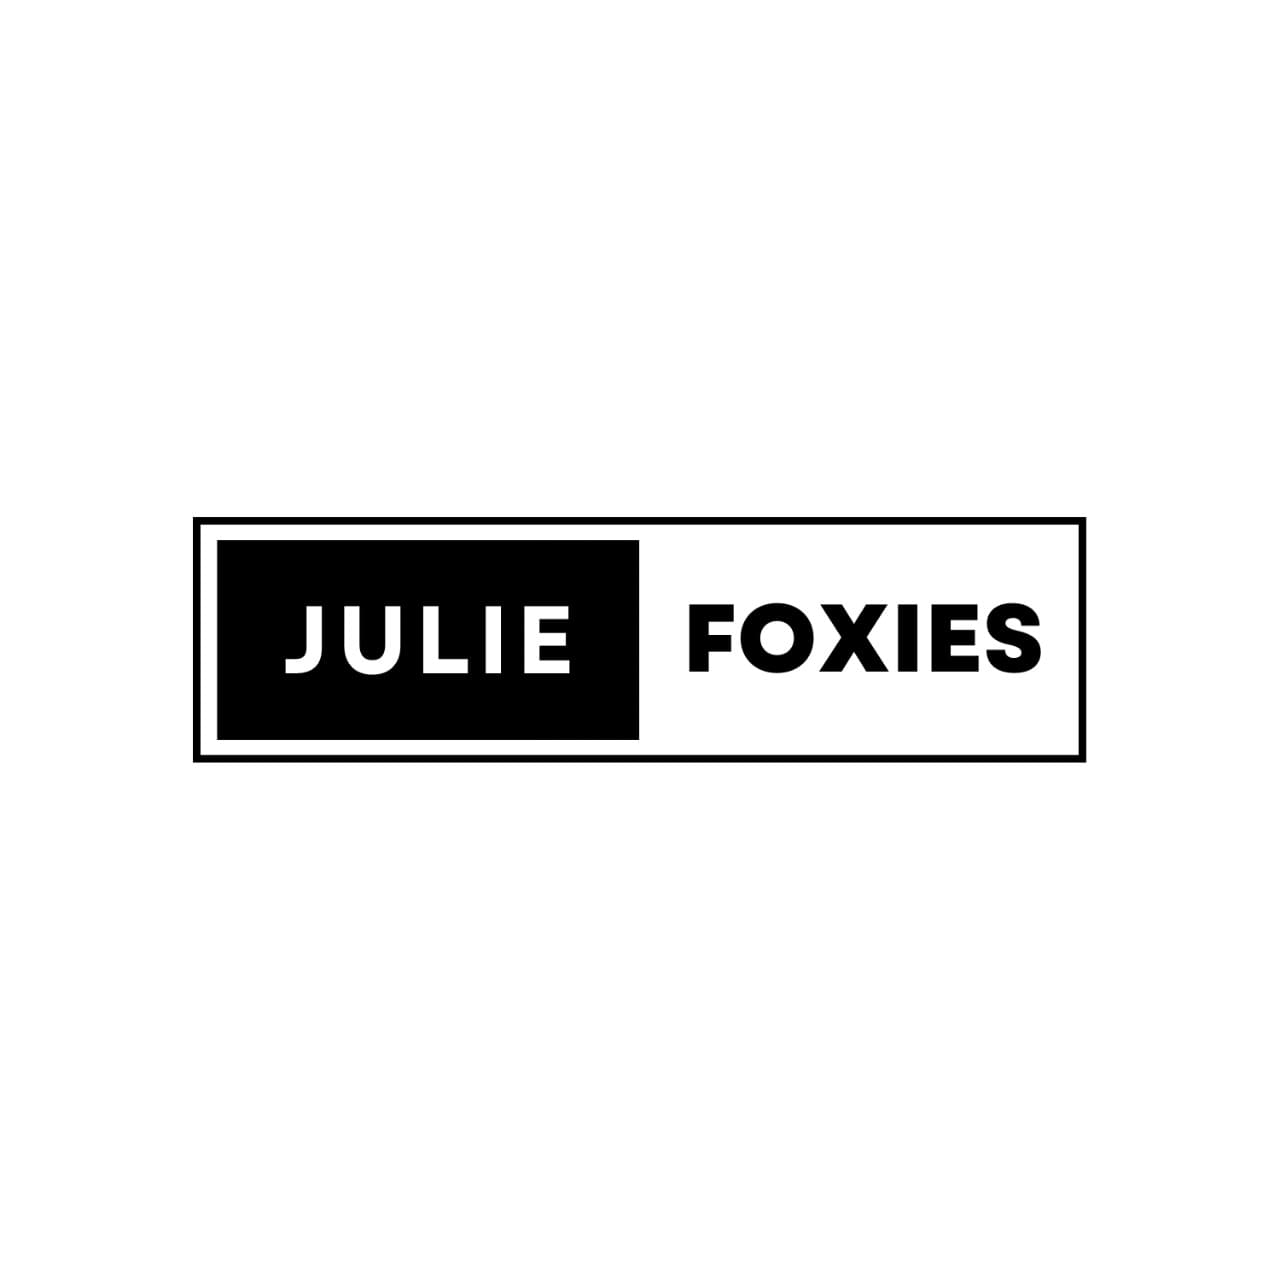 Juliefoxies